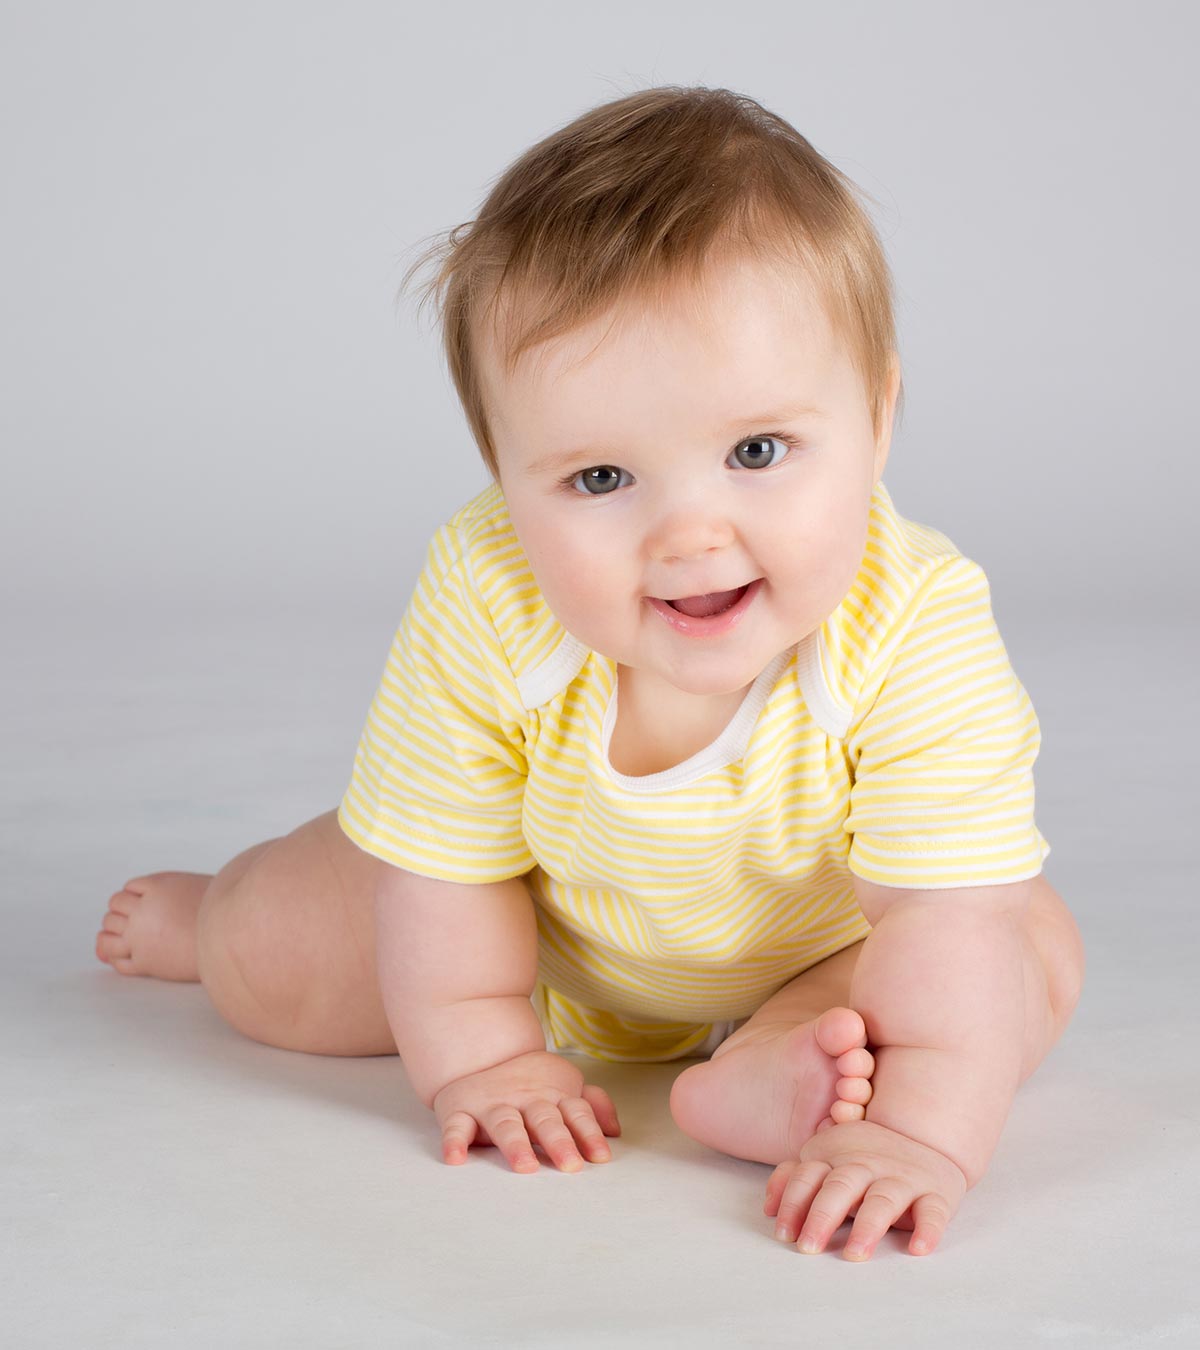 10-month-old Baby Reaching Developmental Milestones